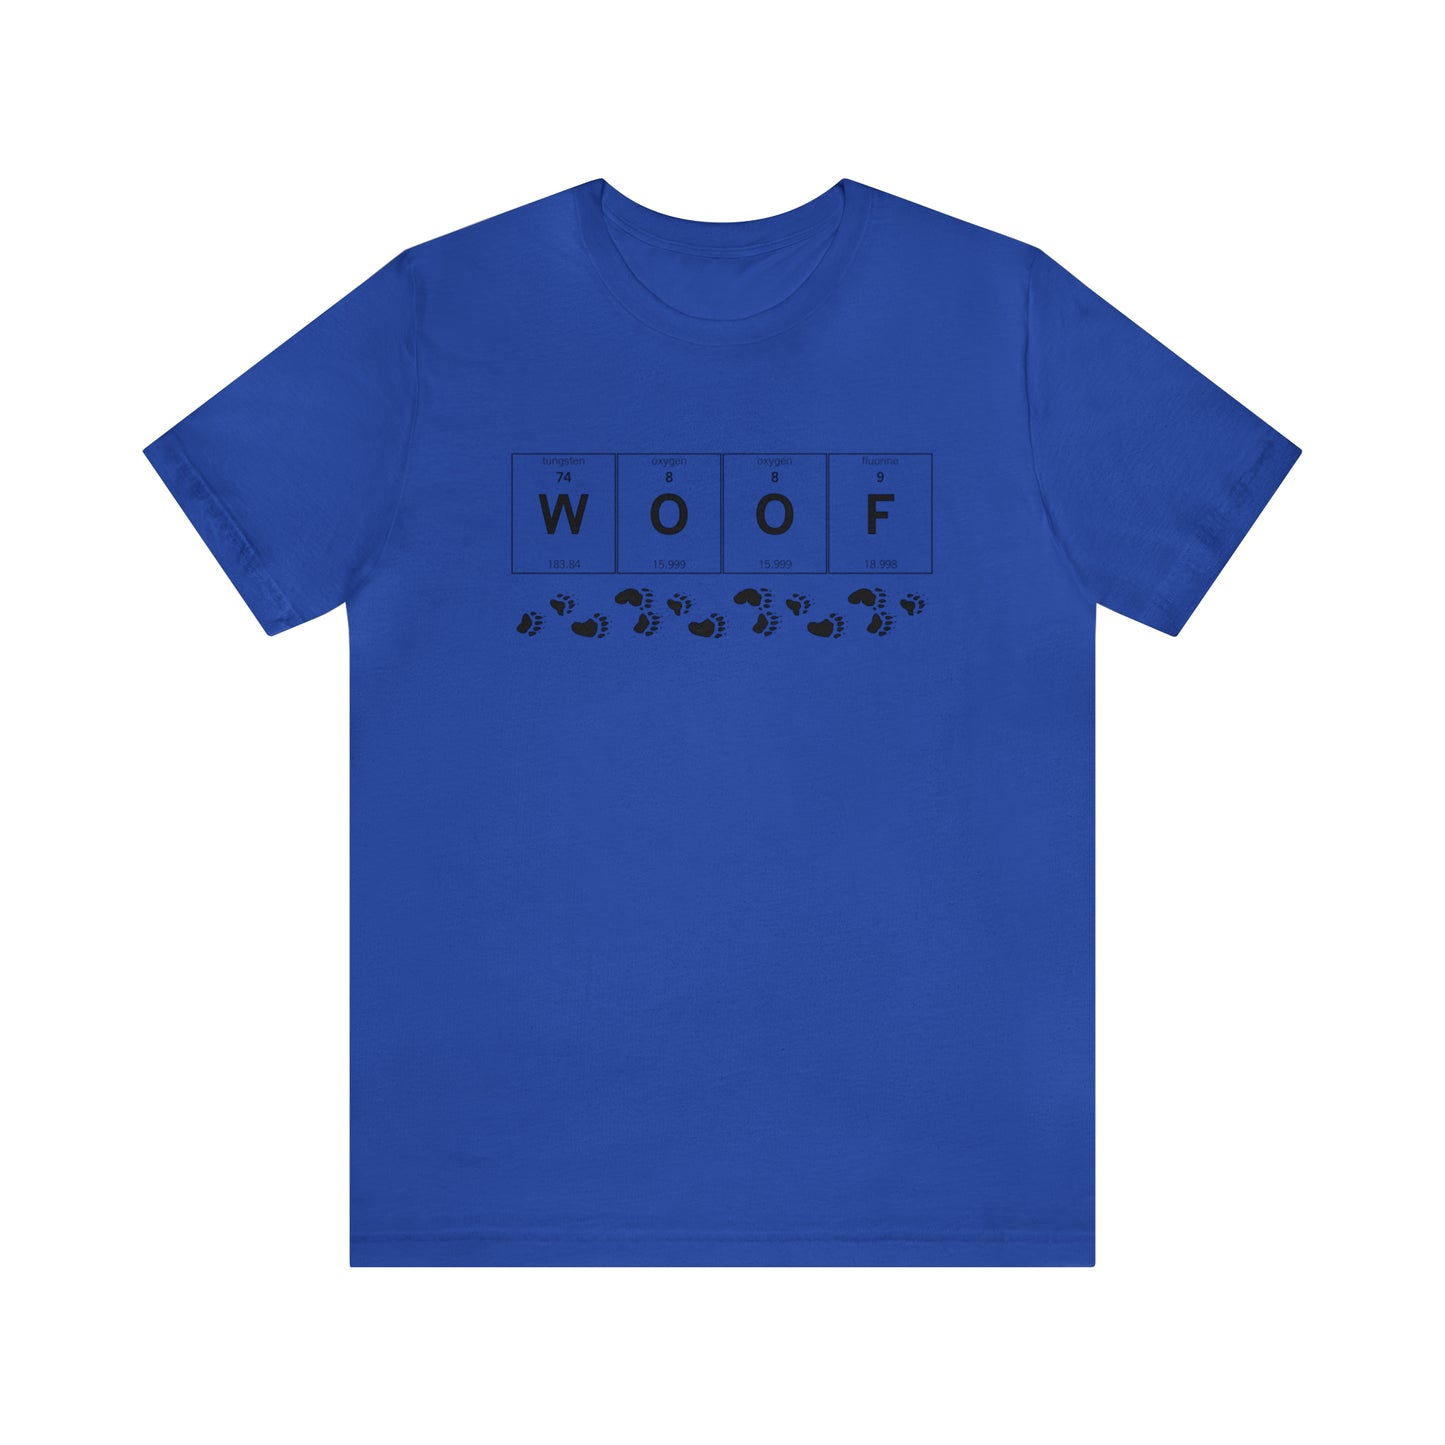 WOOF Camiseta de manga corta unisex con diseño de oso gay de tabla periódica